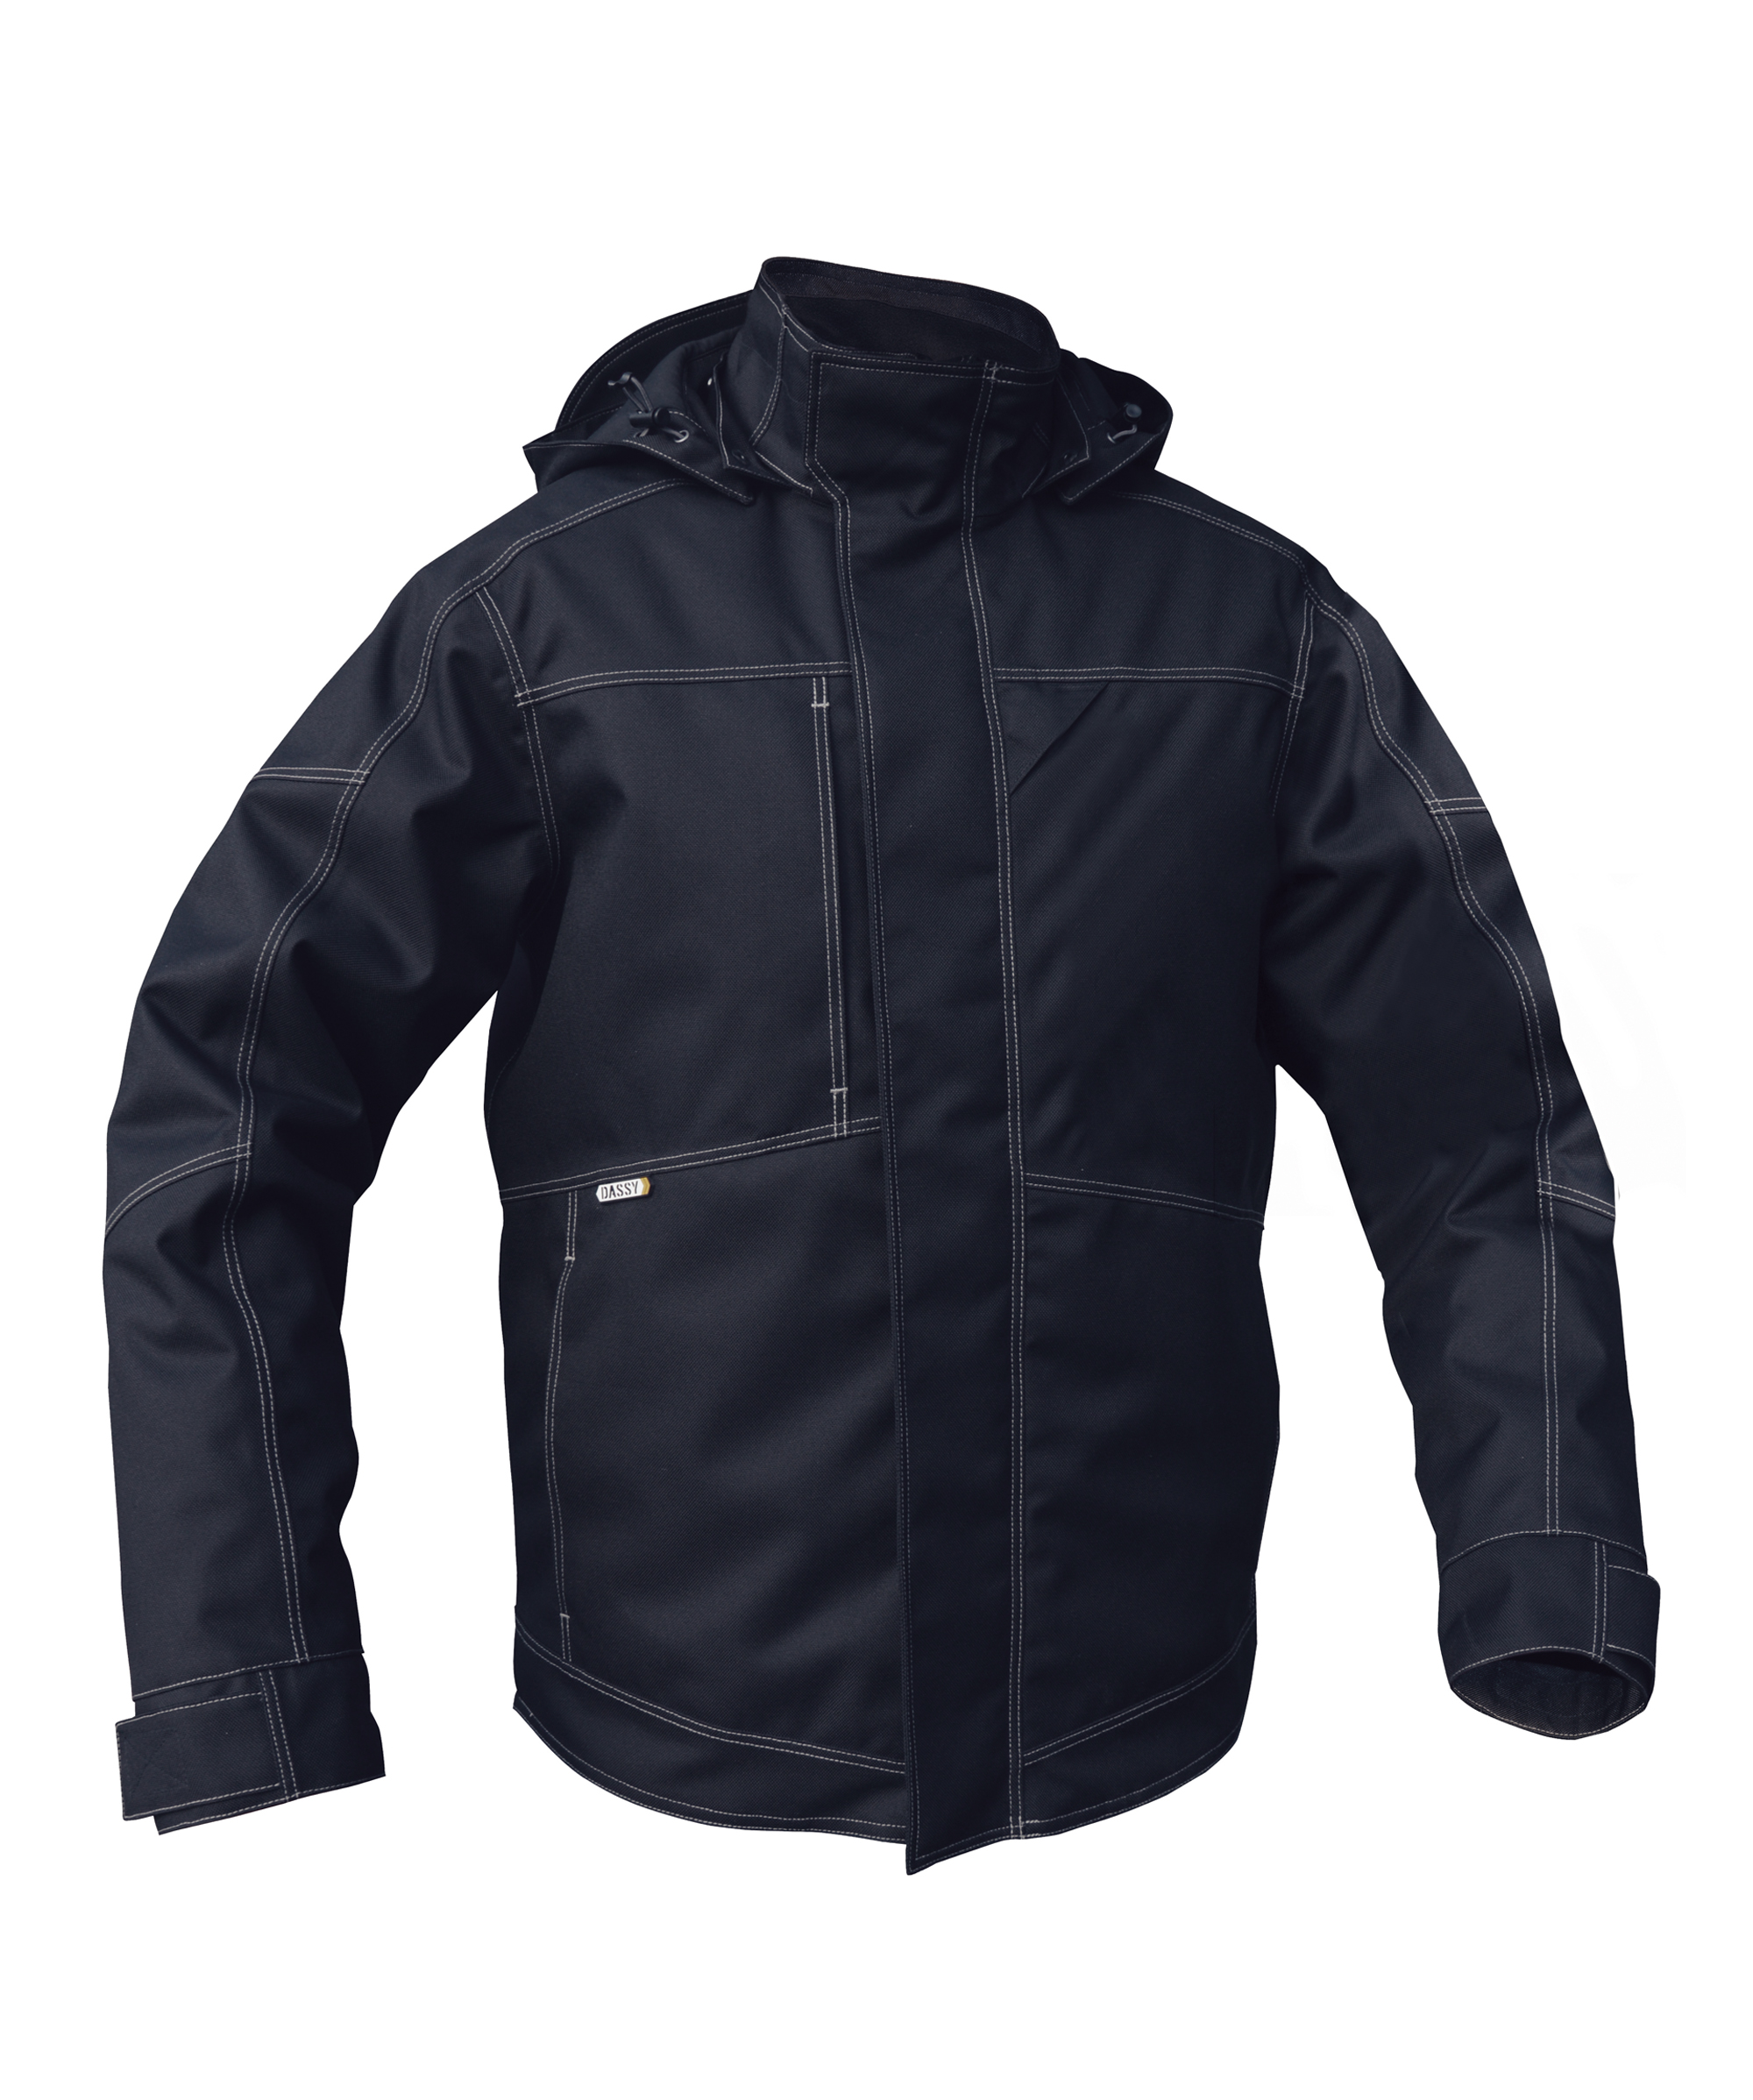 minsk_winter-jacket_navy_front.jpg